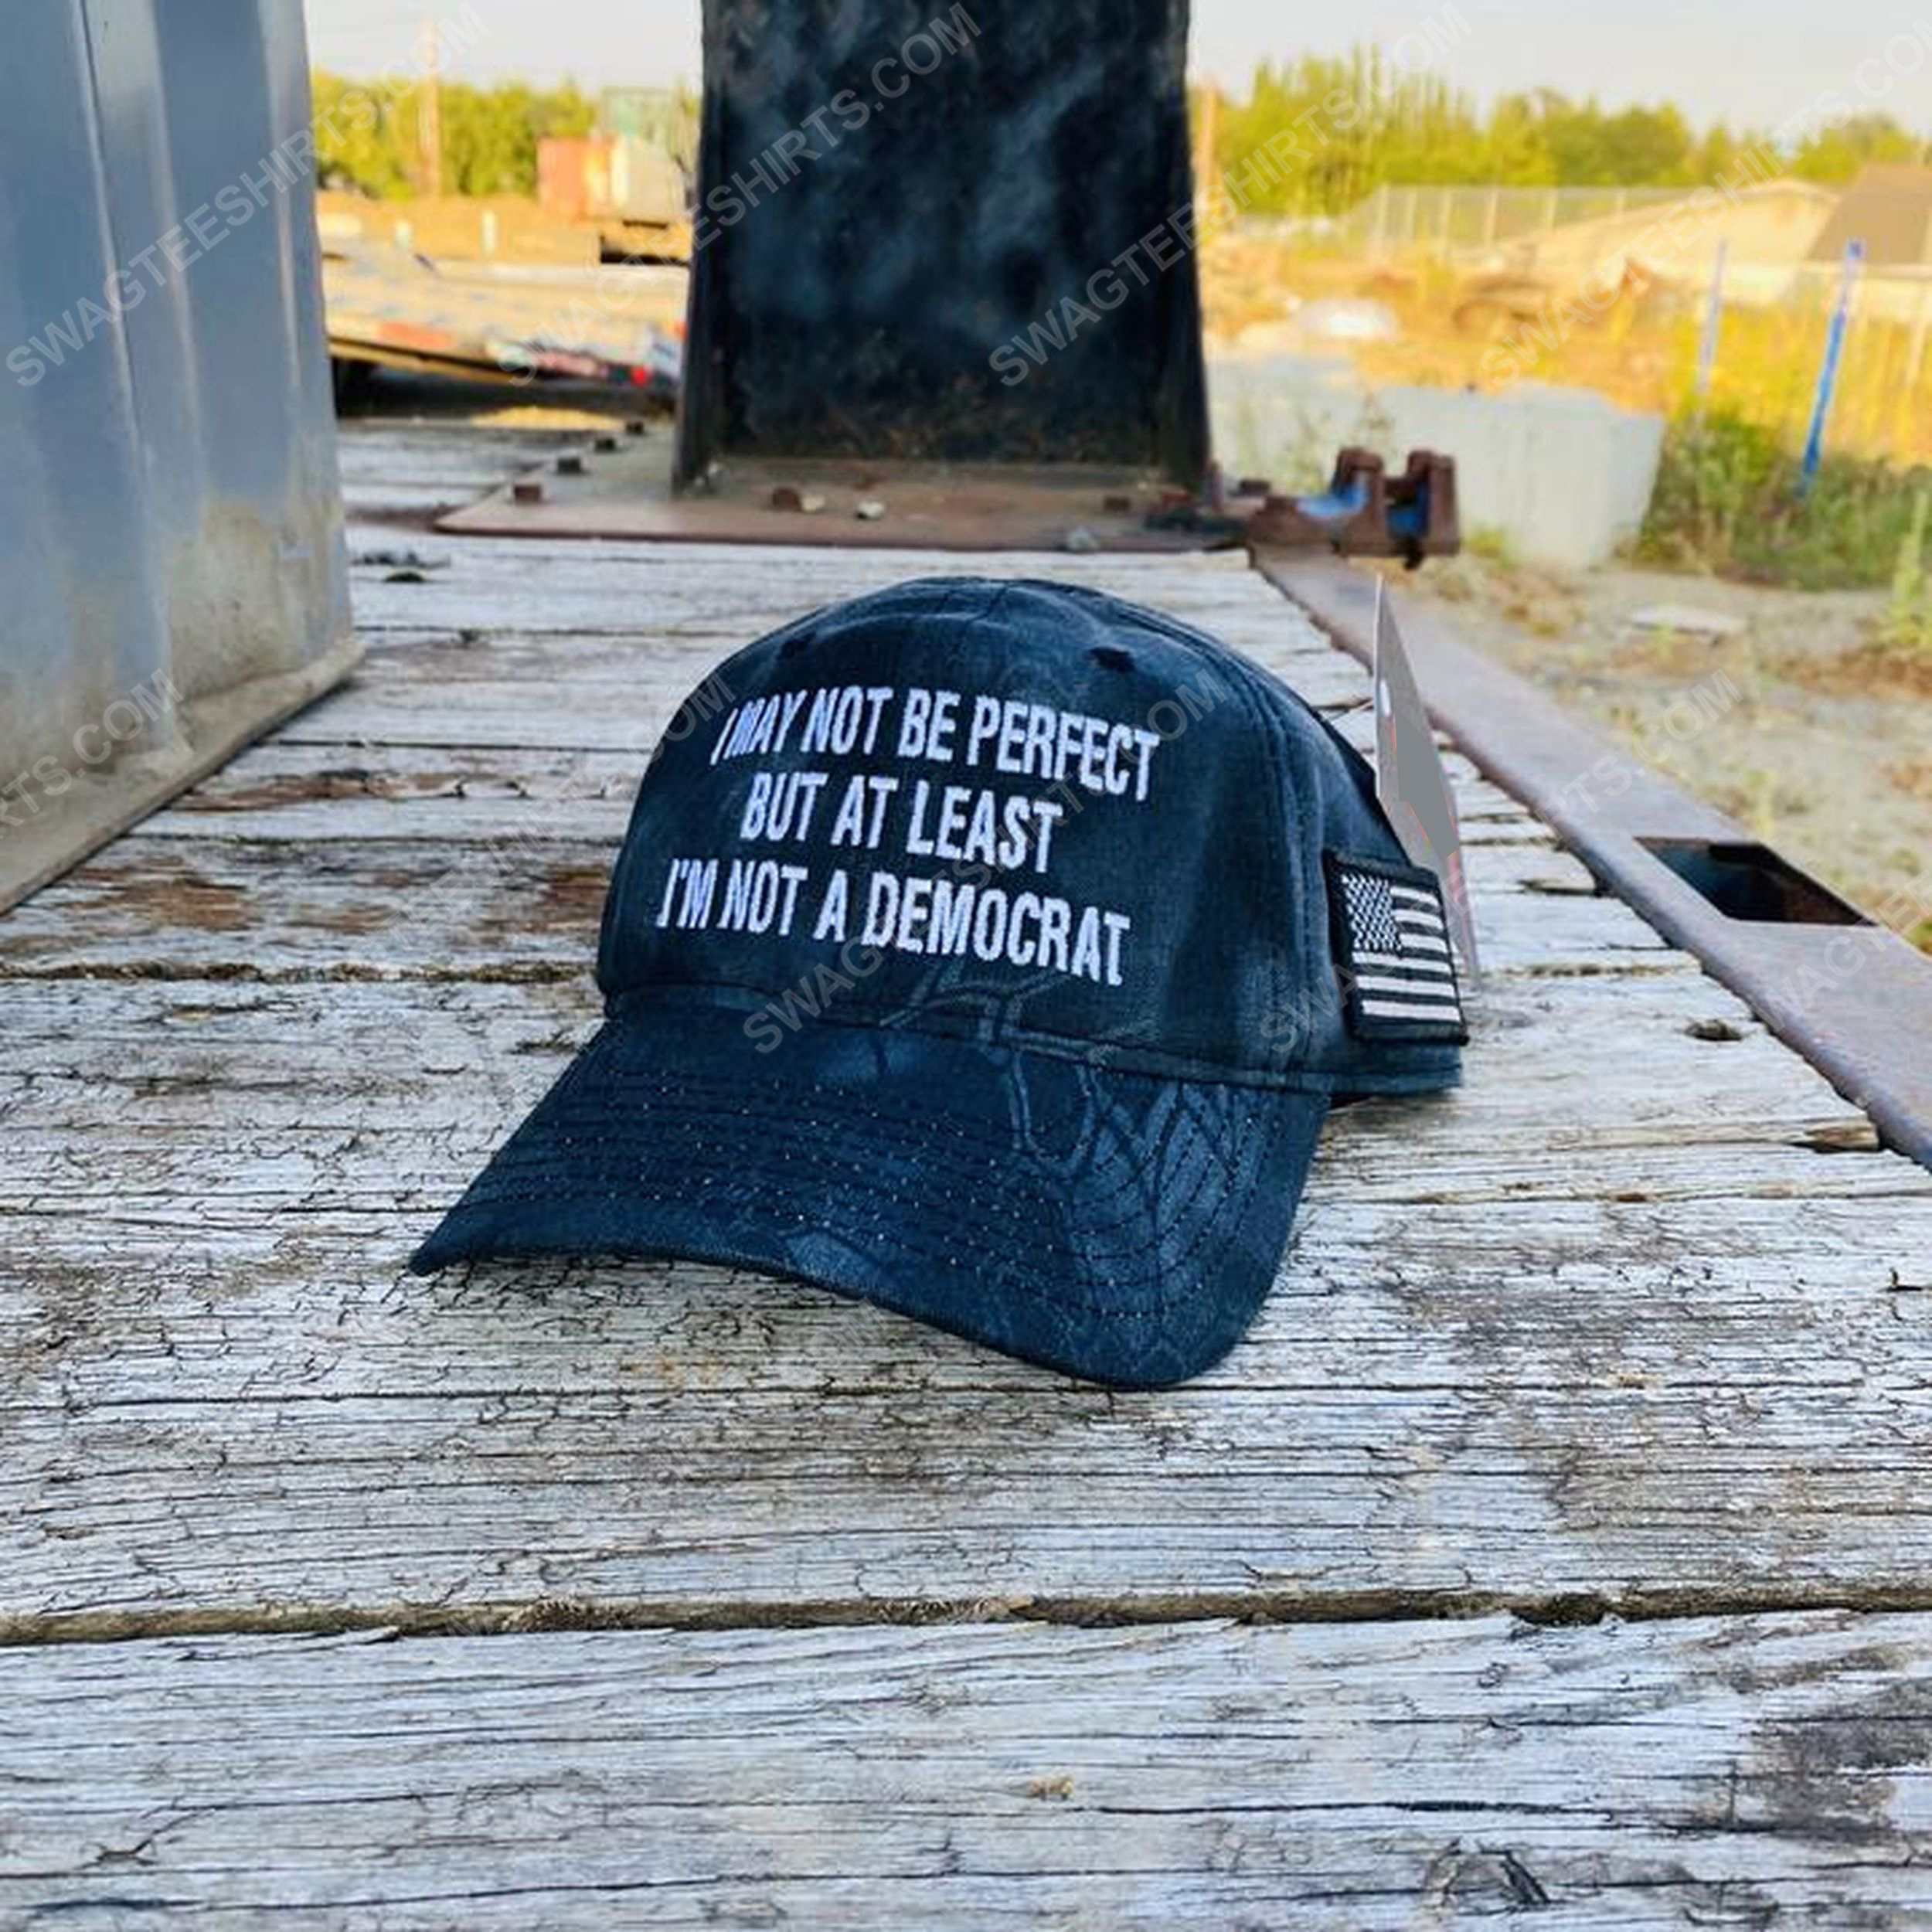 I may not be perfect but at least i'm not a democrat full print classic hat 1 - Copy (2)